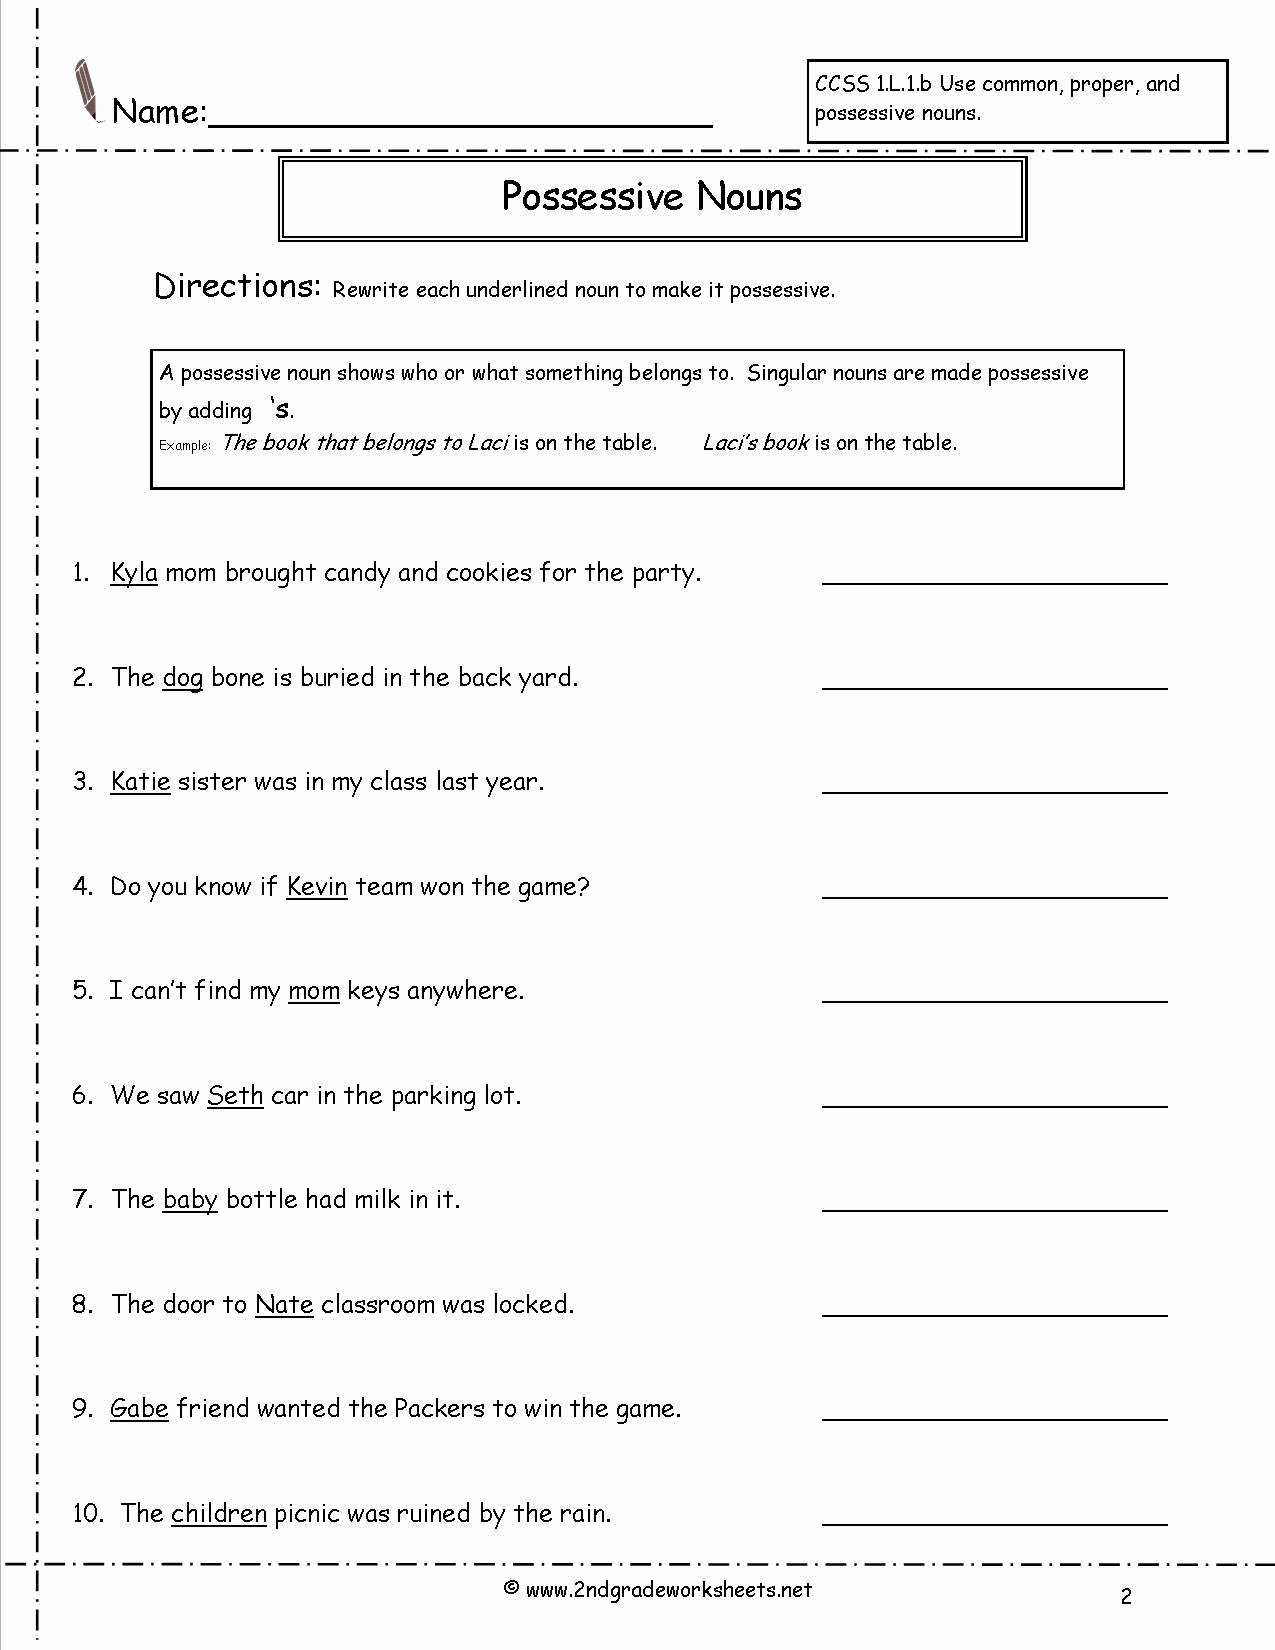 Possessive Pronouns Worksheet 2nd Grade Awesome 15 Best Of Proper Pronouns Worksheets 2nd Grade